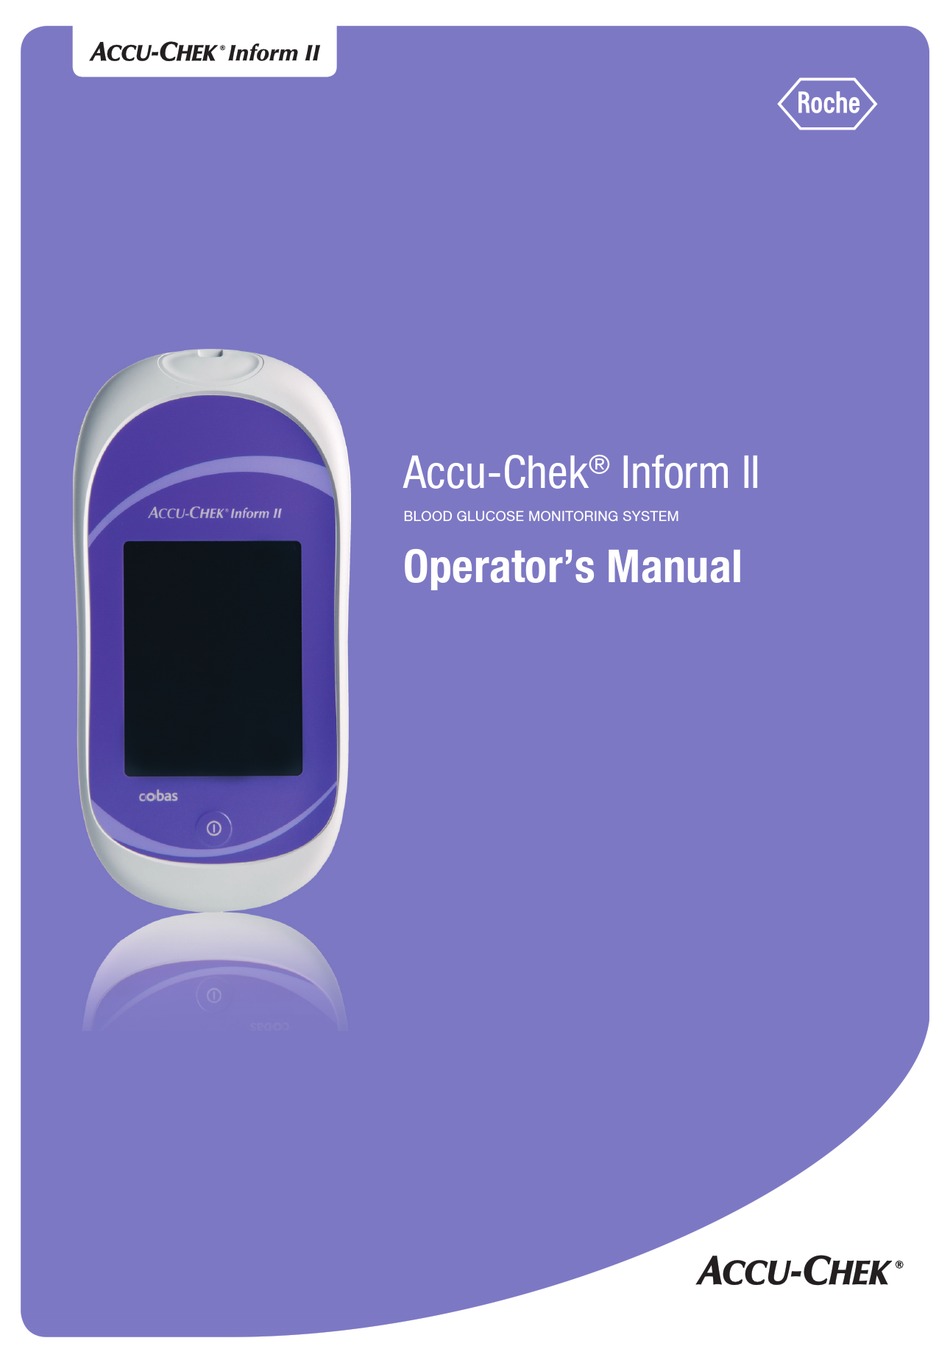 ROCHE ACCU-CHEK INFORM II OPERATOR'S MANUAL Pdf Download | ManualsLib